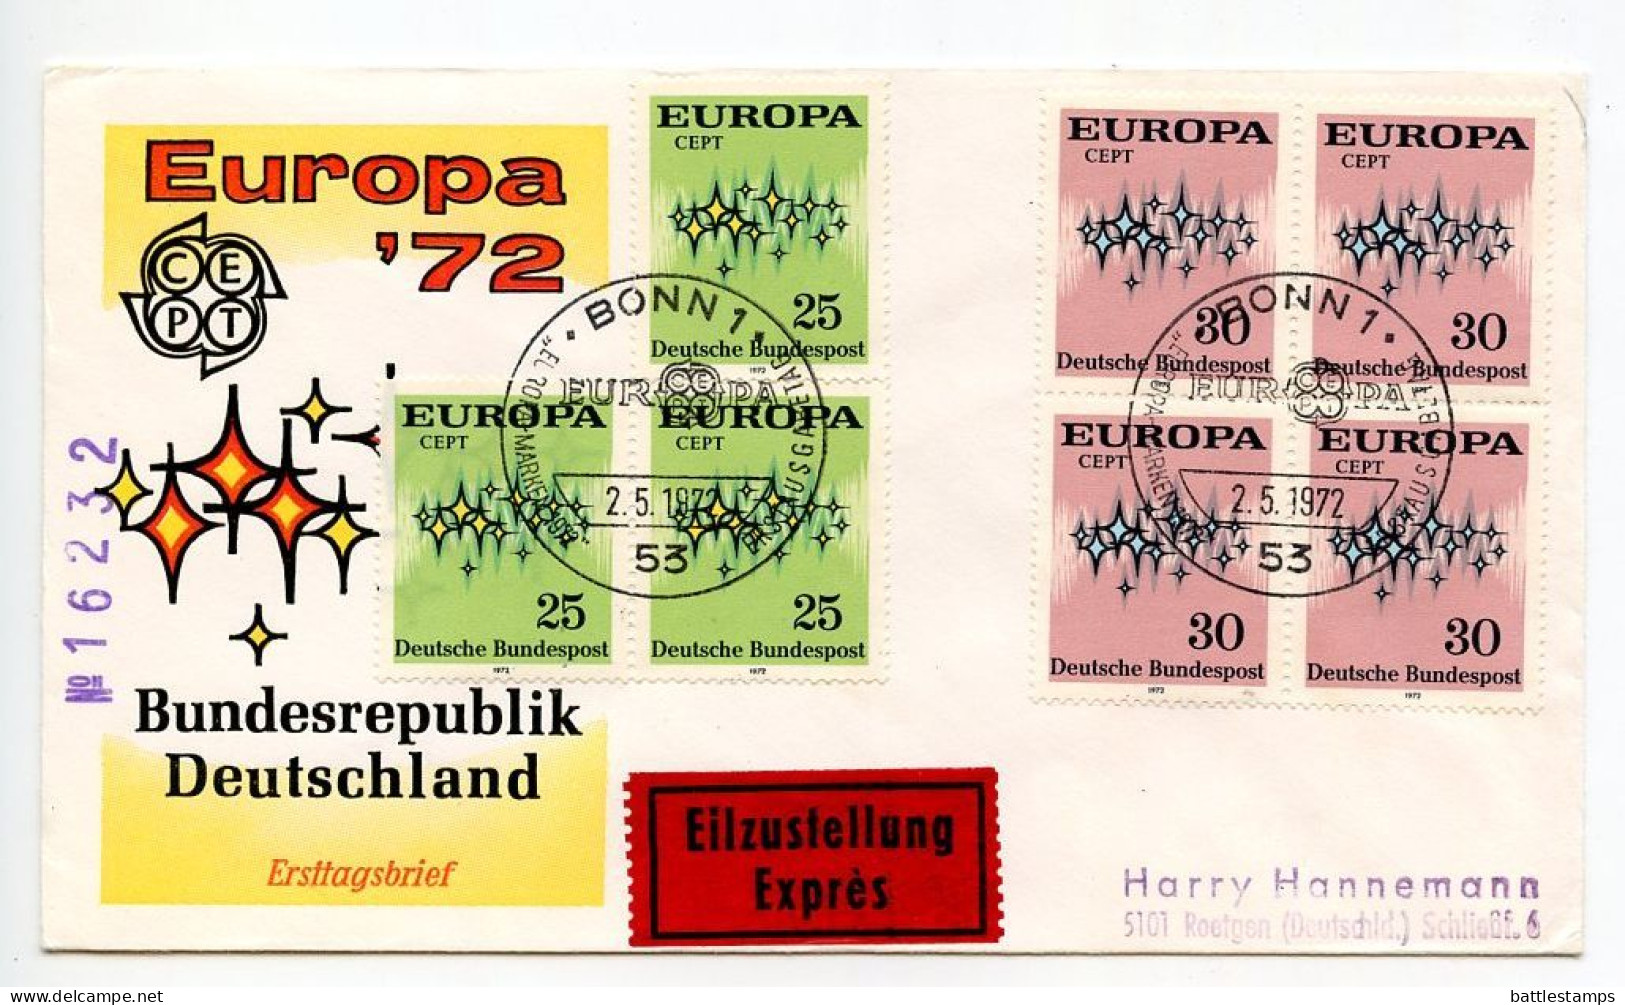 Germany, West 1972 2 FDCs Scott 1114-1115 Europa, Express Mail Label - 1971-1980